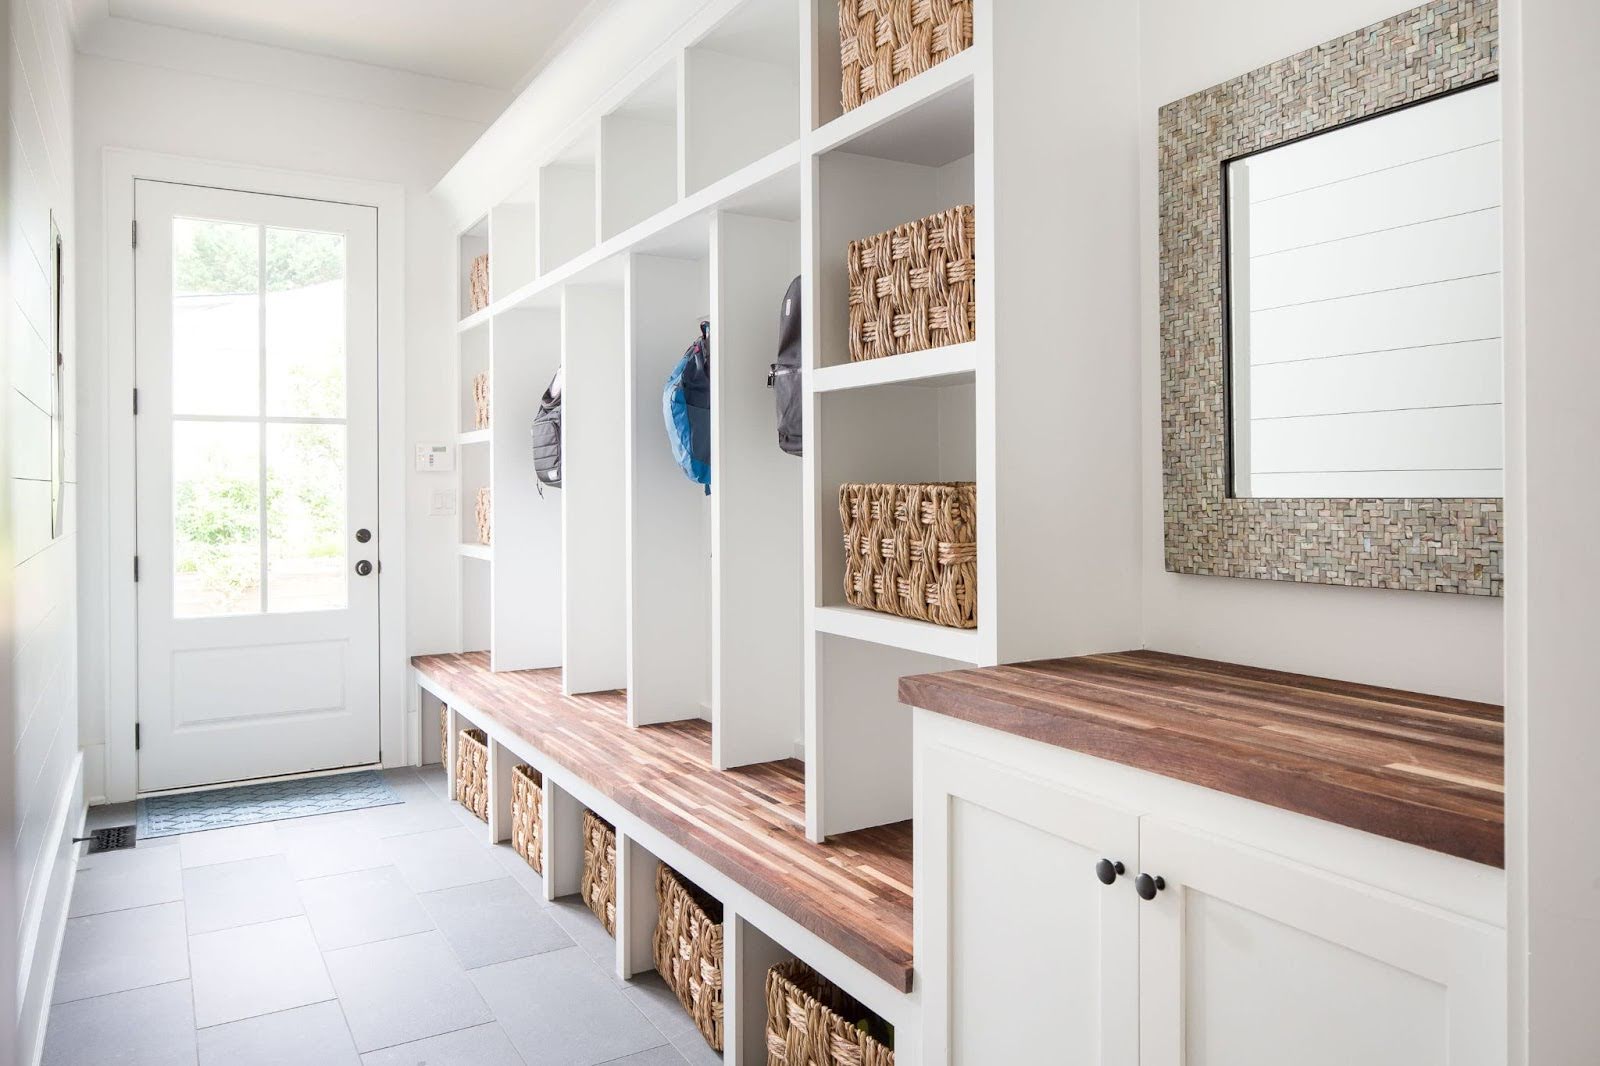 Shelf space made of wood